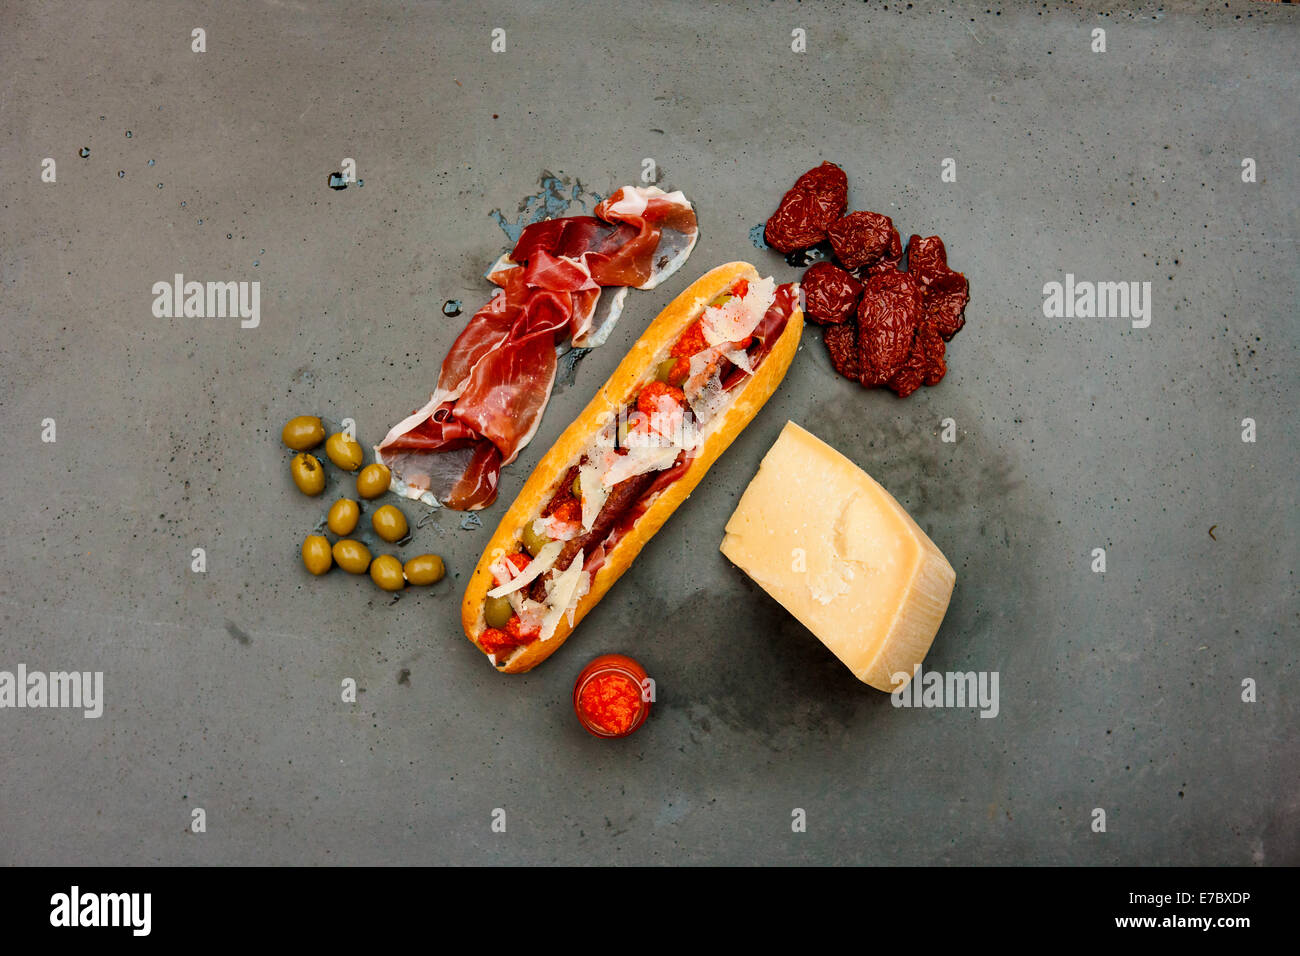 Moderno hot dog con salchicha de cordero, jamón, tomates secados al sol, queso parmesano, aceitunas, salsa de tomate de mesa de hormigón Foto de stock